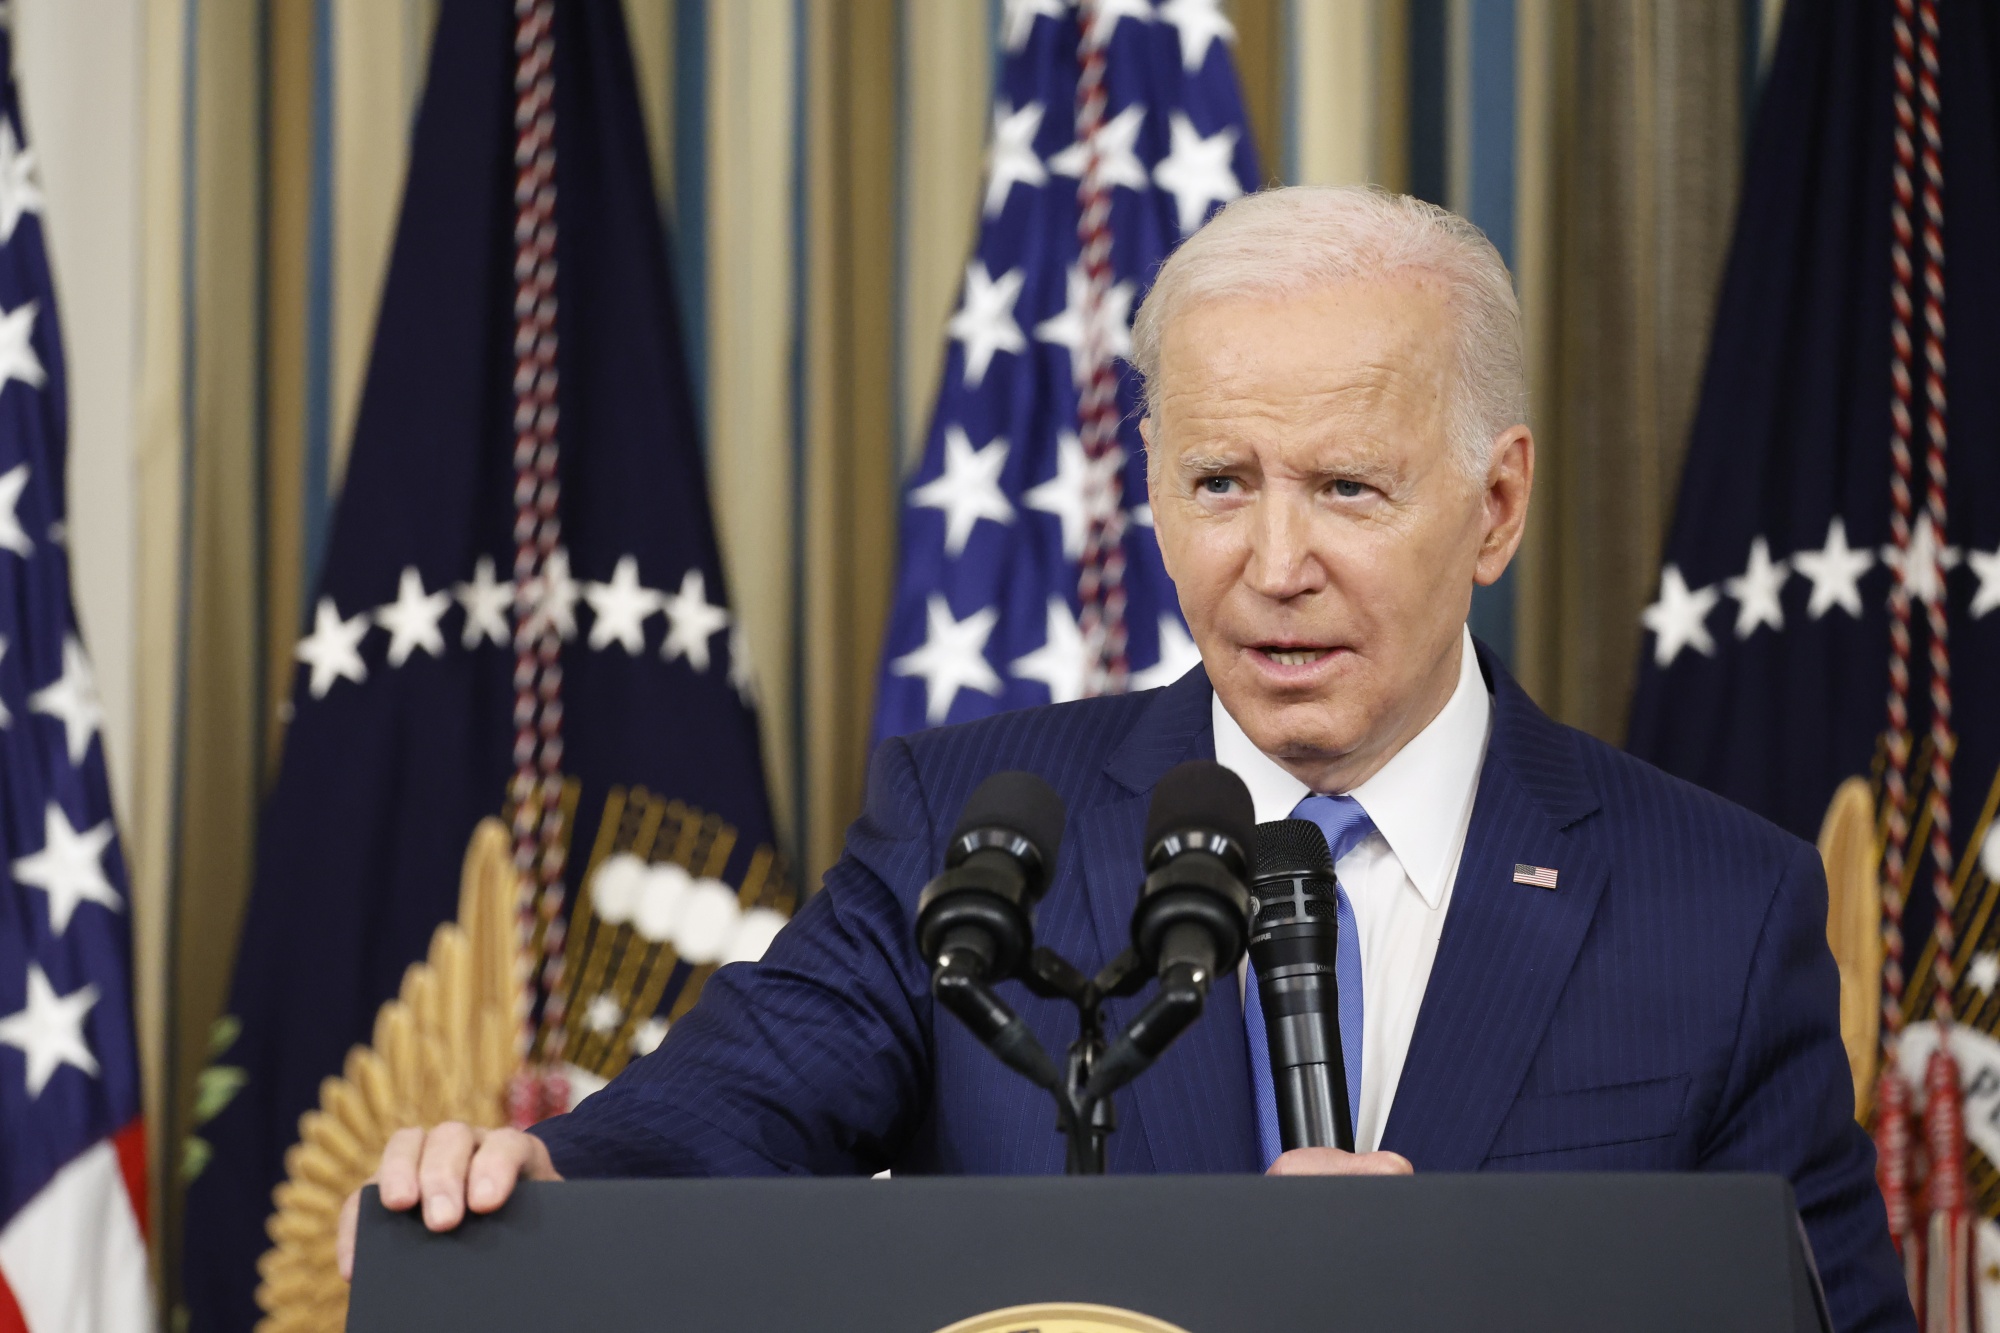 Tracking regulatory changes in the Biden era